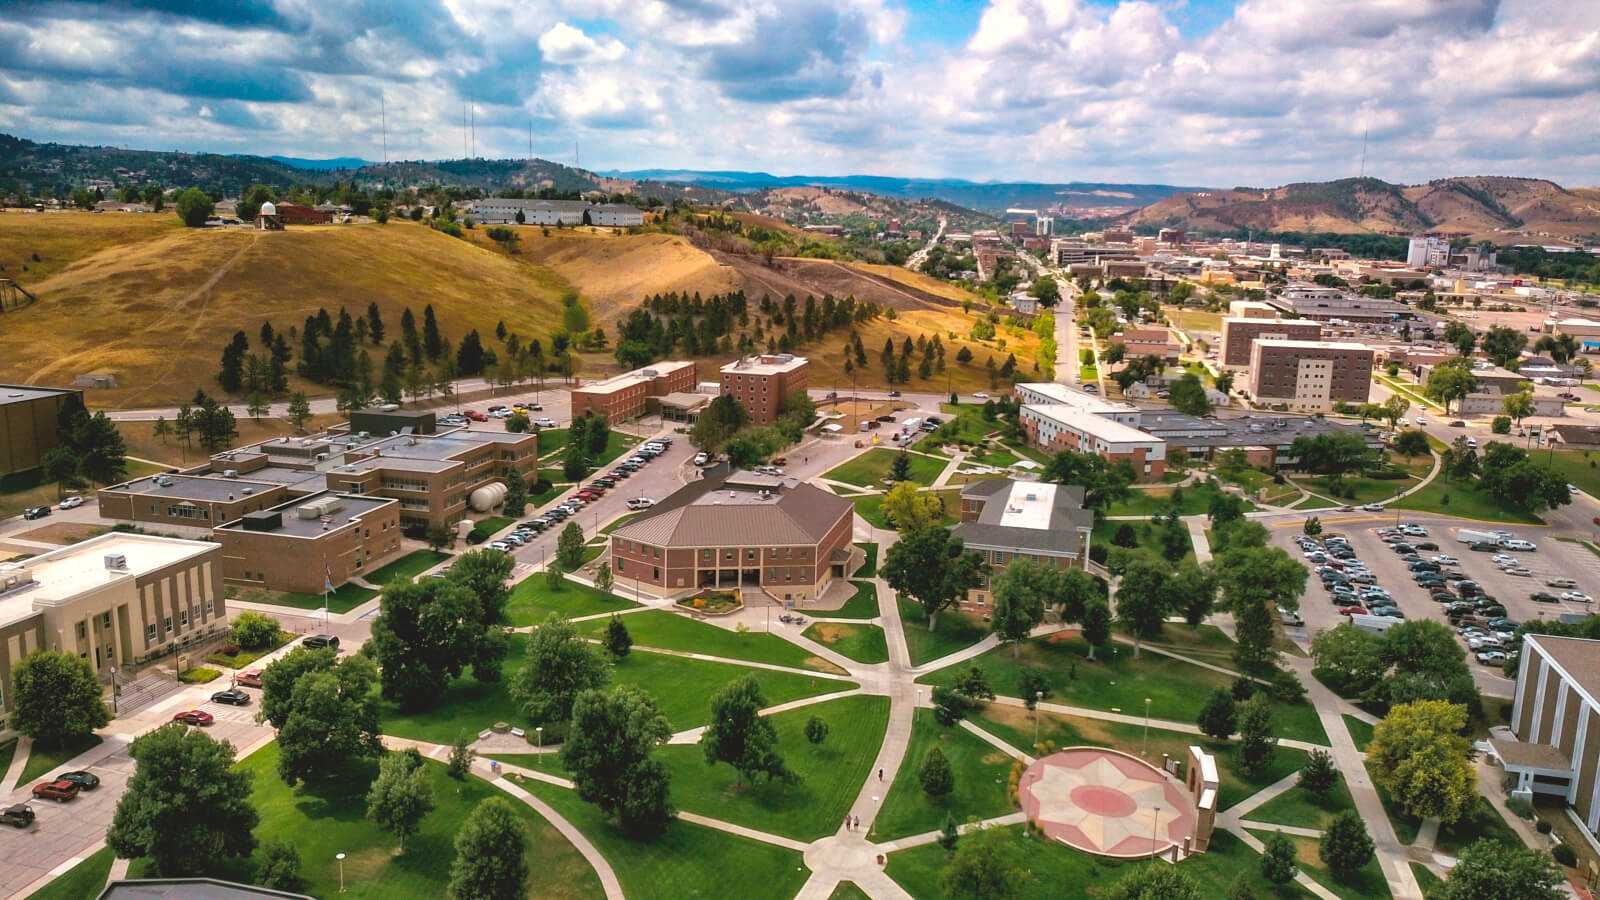 South Dakota School of Mines and Technology